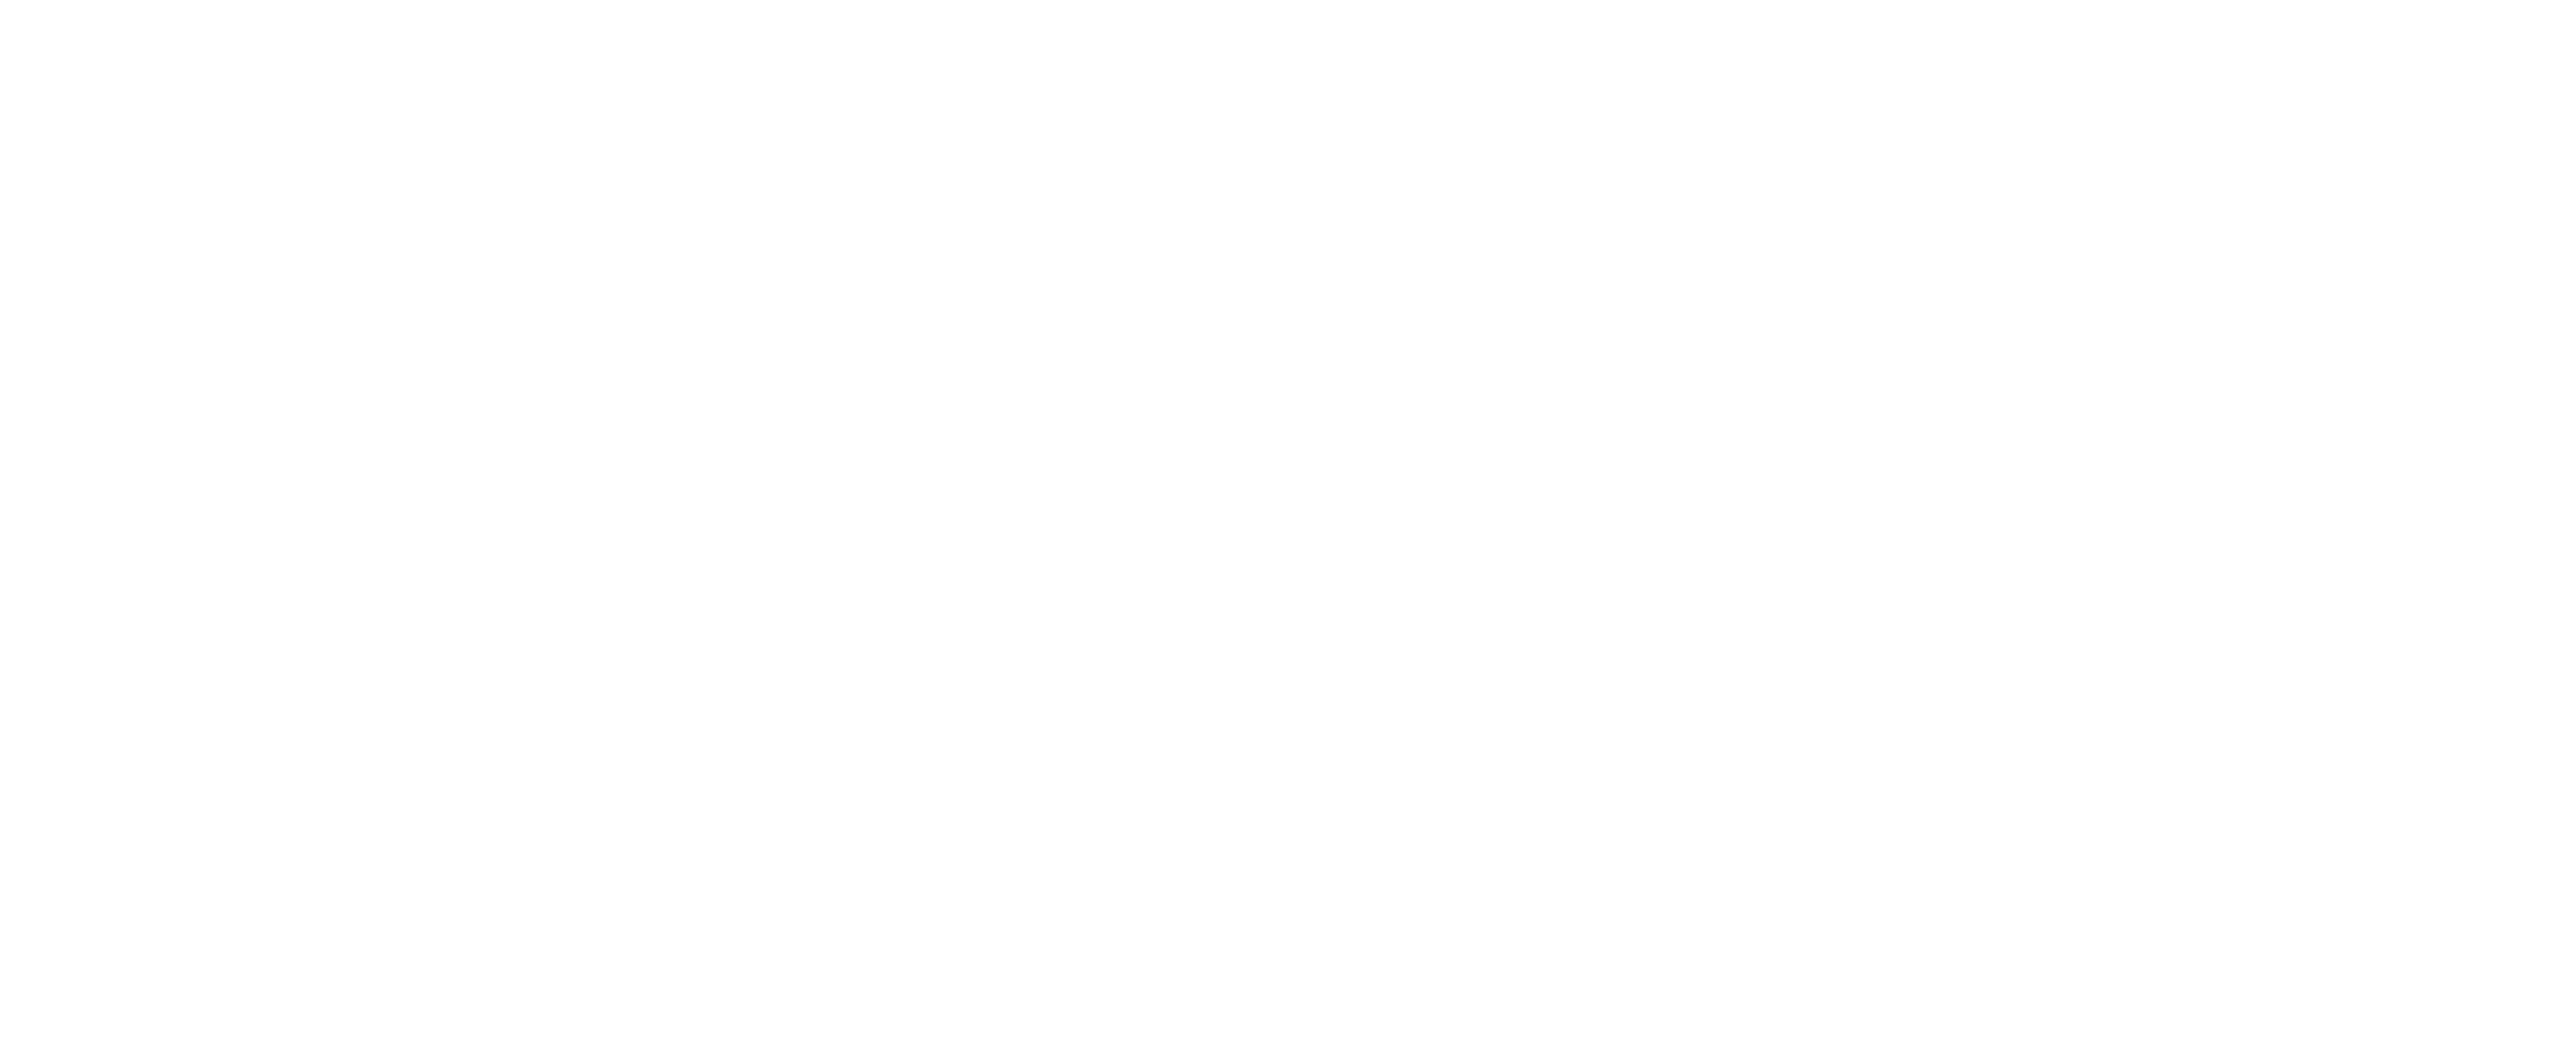 Longfield Solar Farm